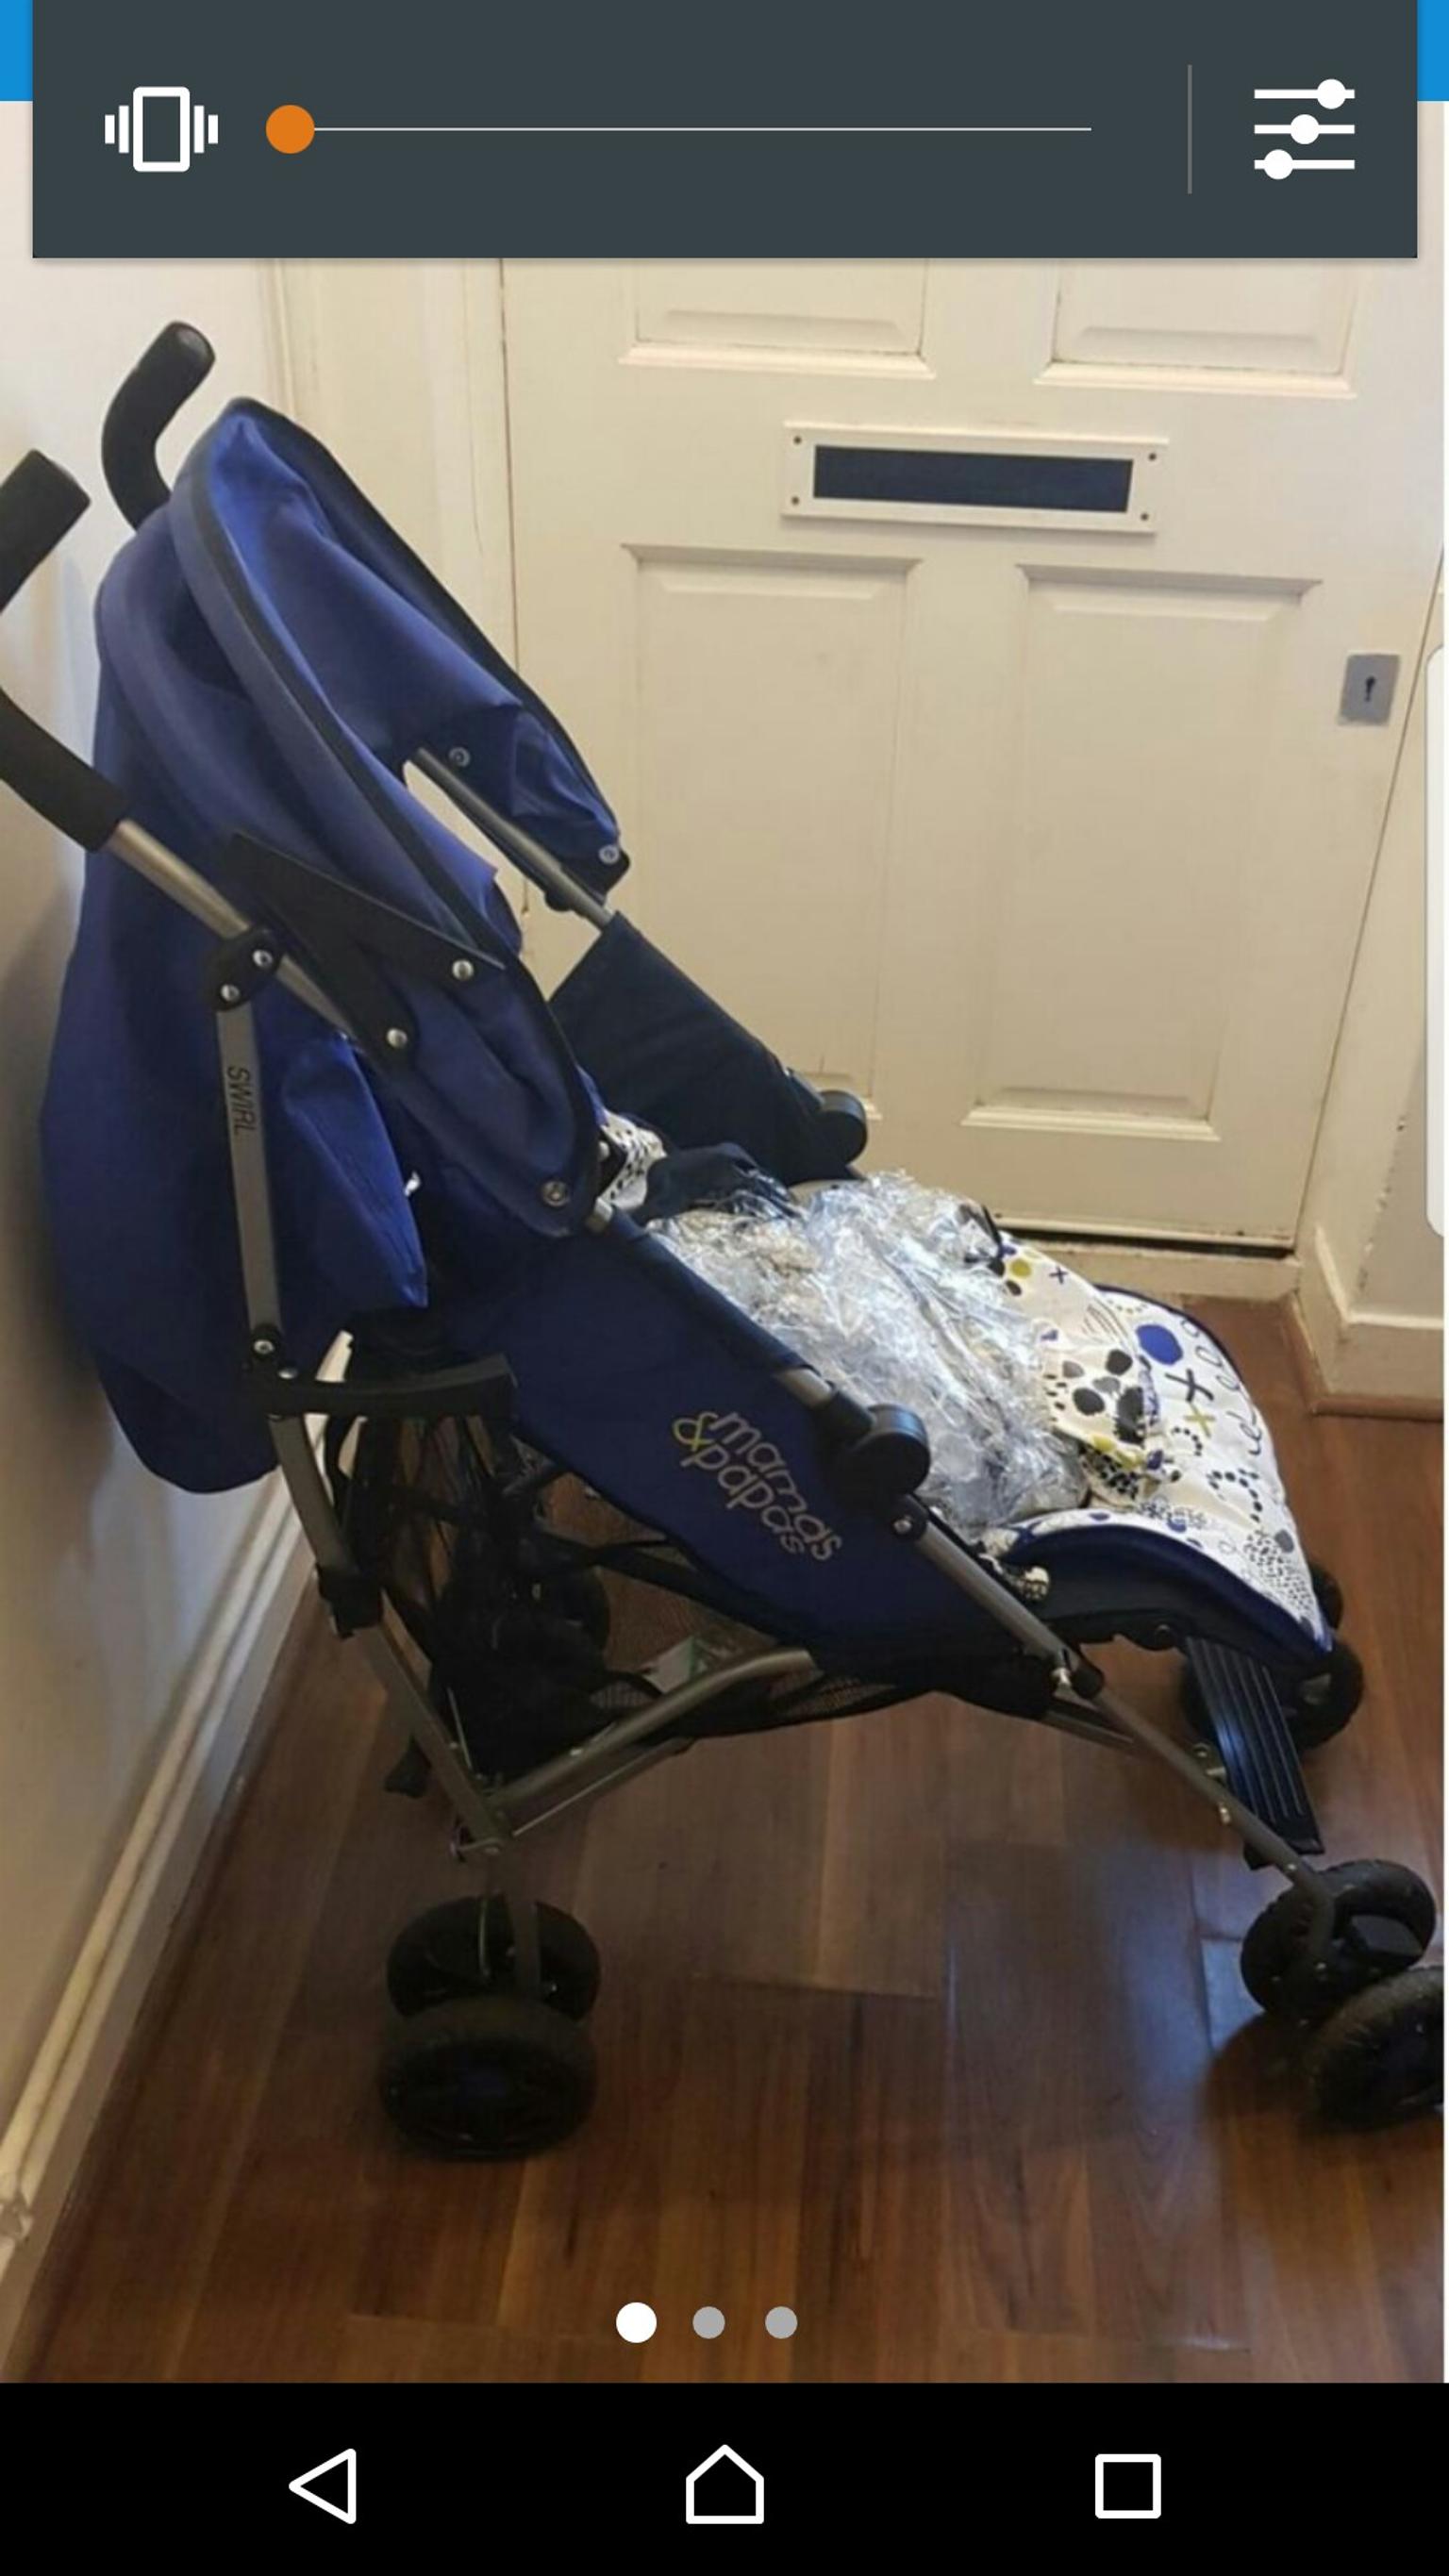 mamas and papas blue stroller